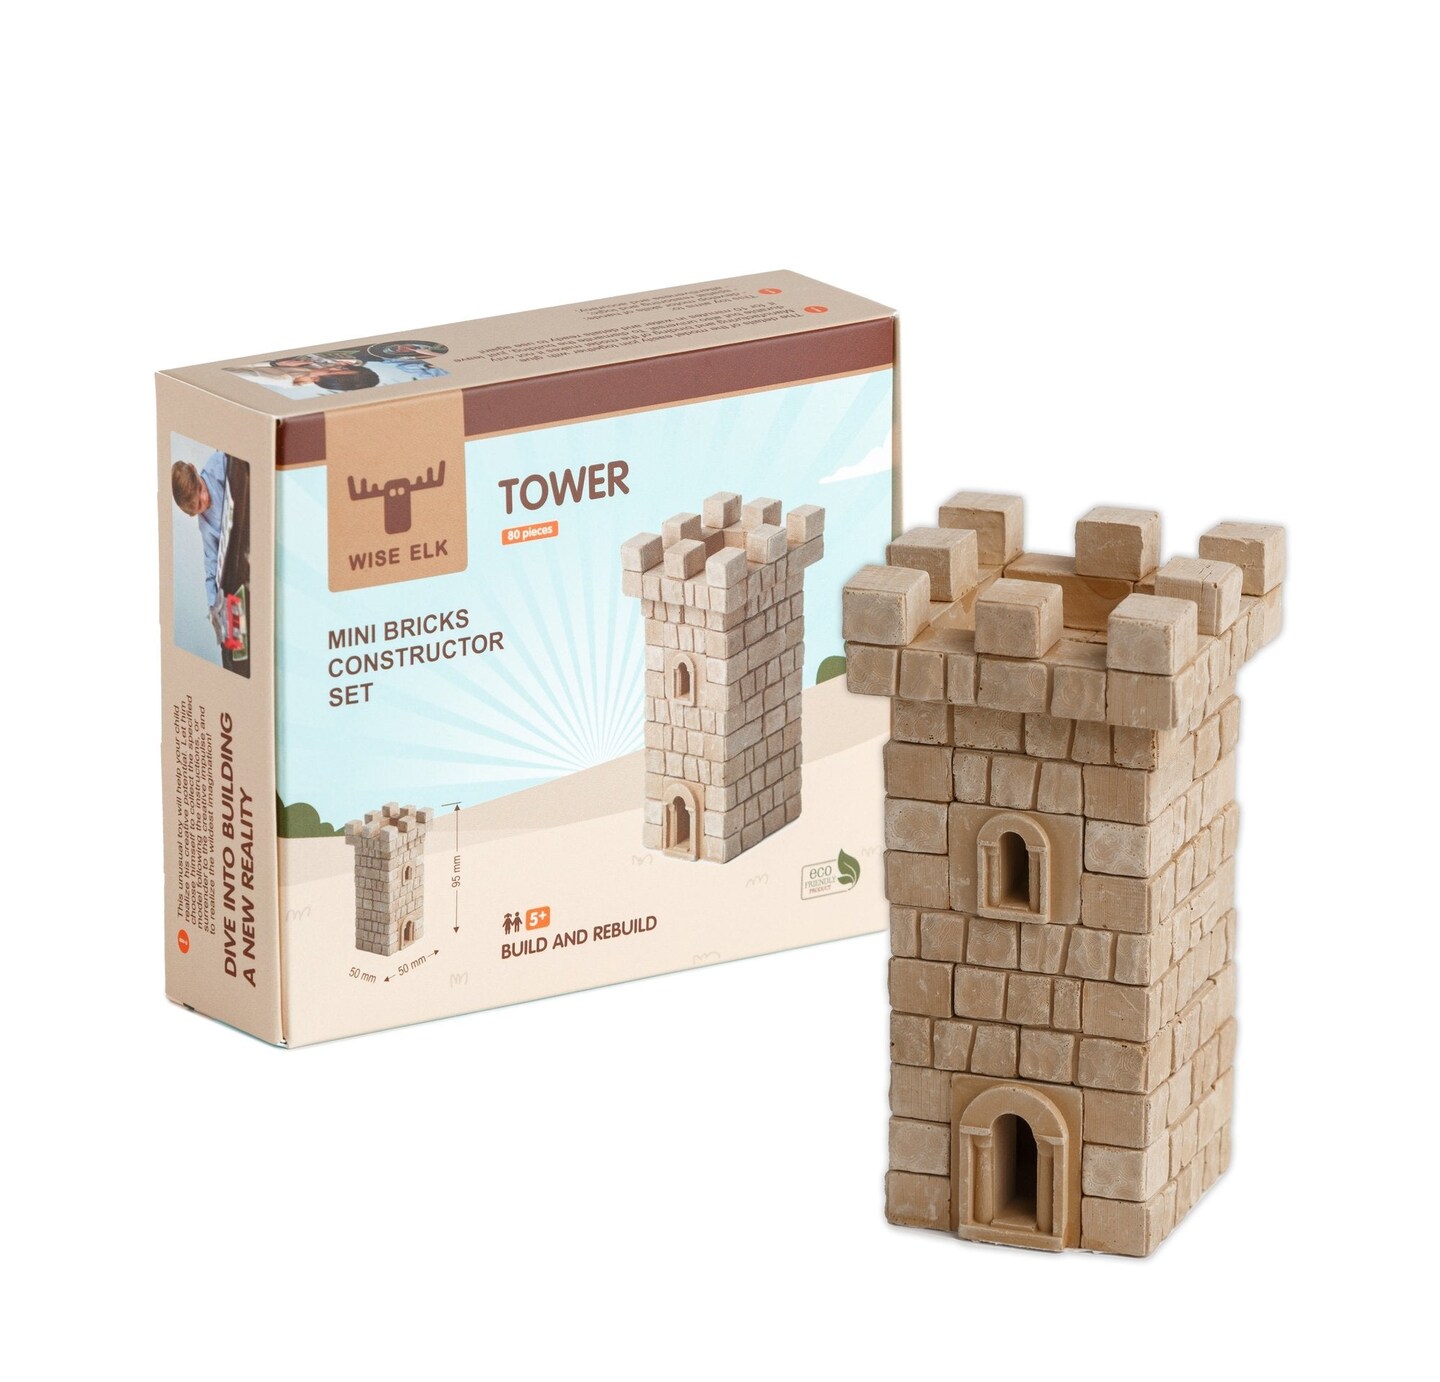 Mini Bricks Construction Set - Small Tower